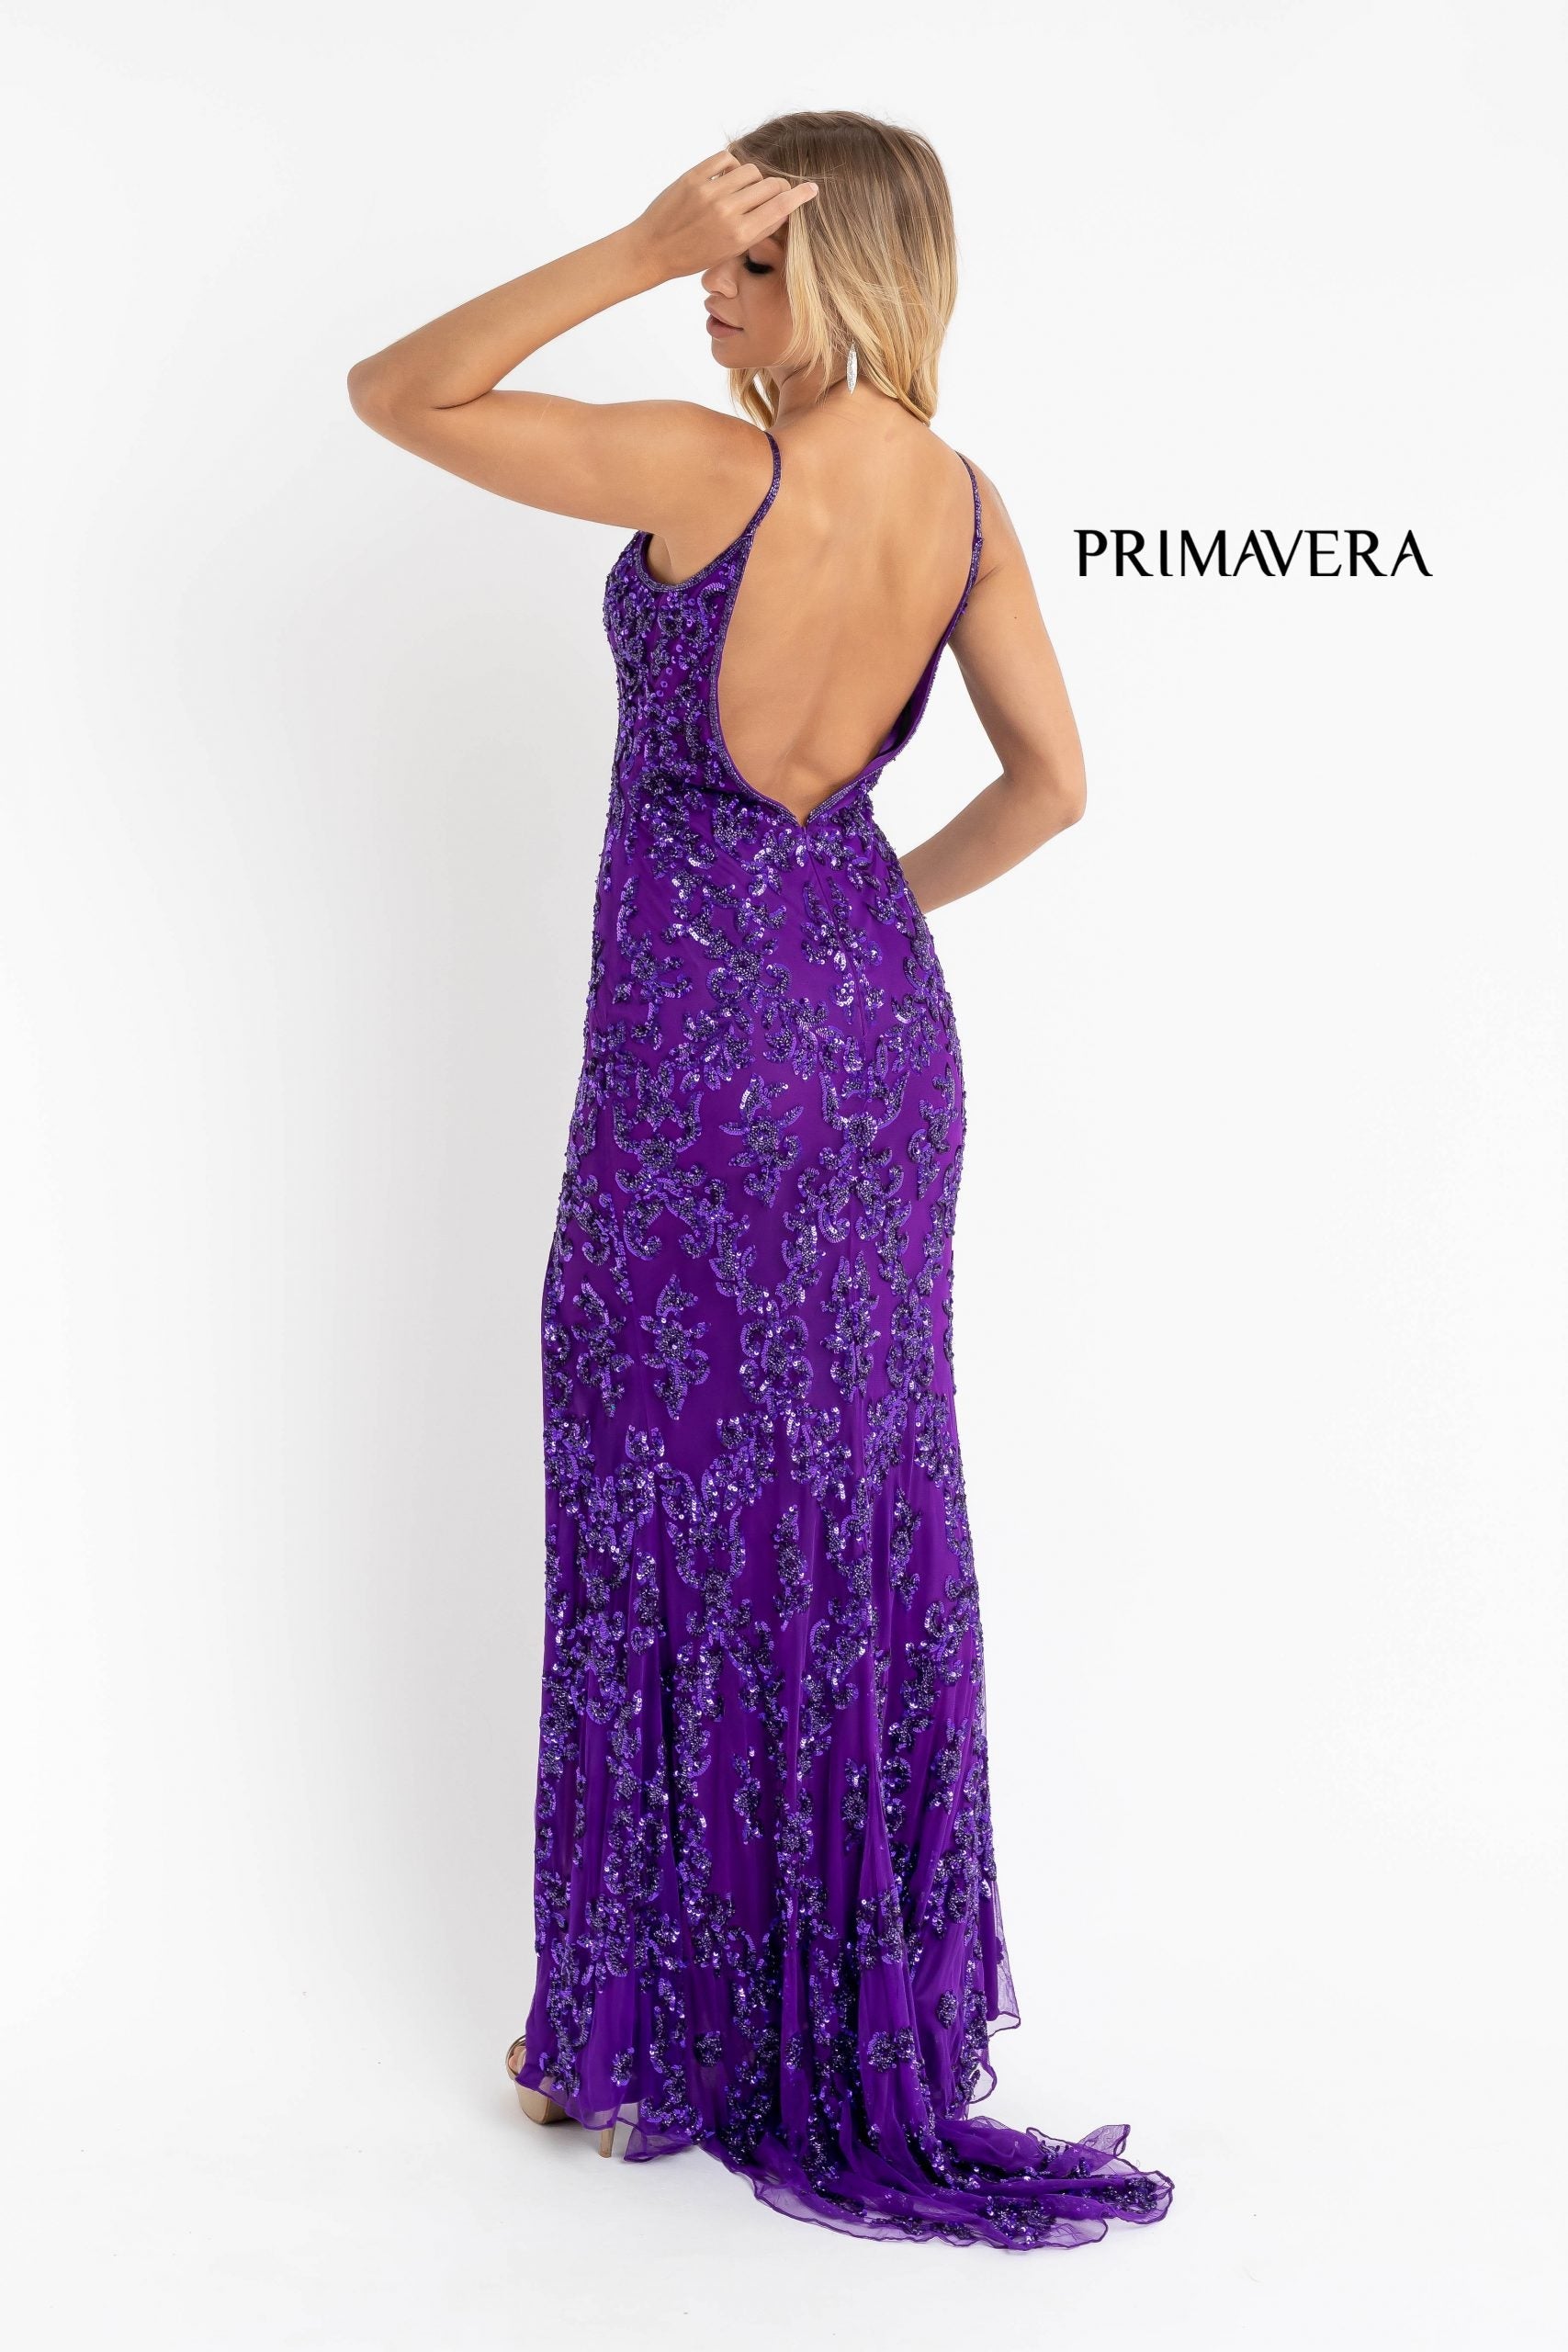 Primavera Couture 3754 Size 18 Purple Prom Dress Sequins V